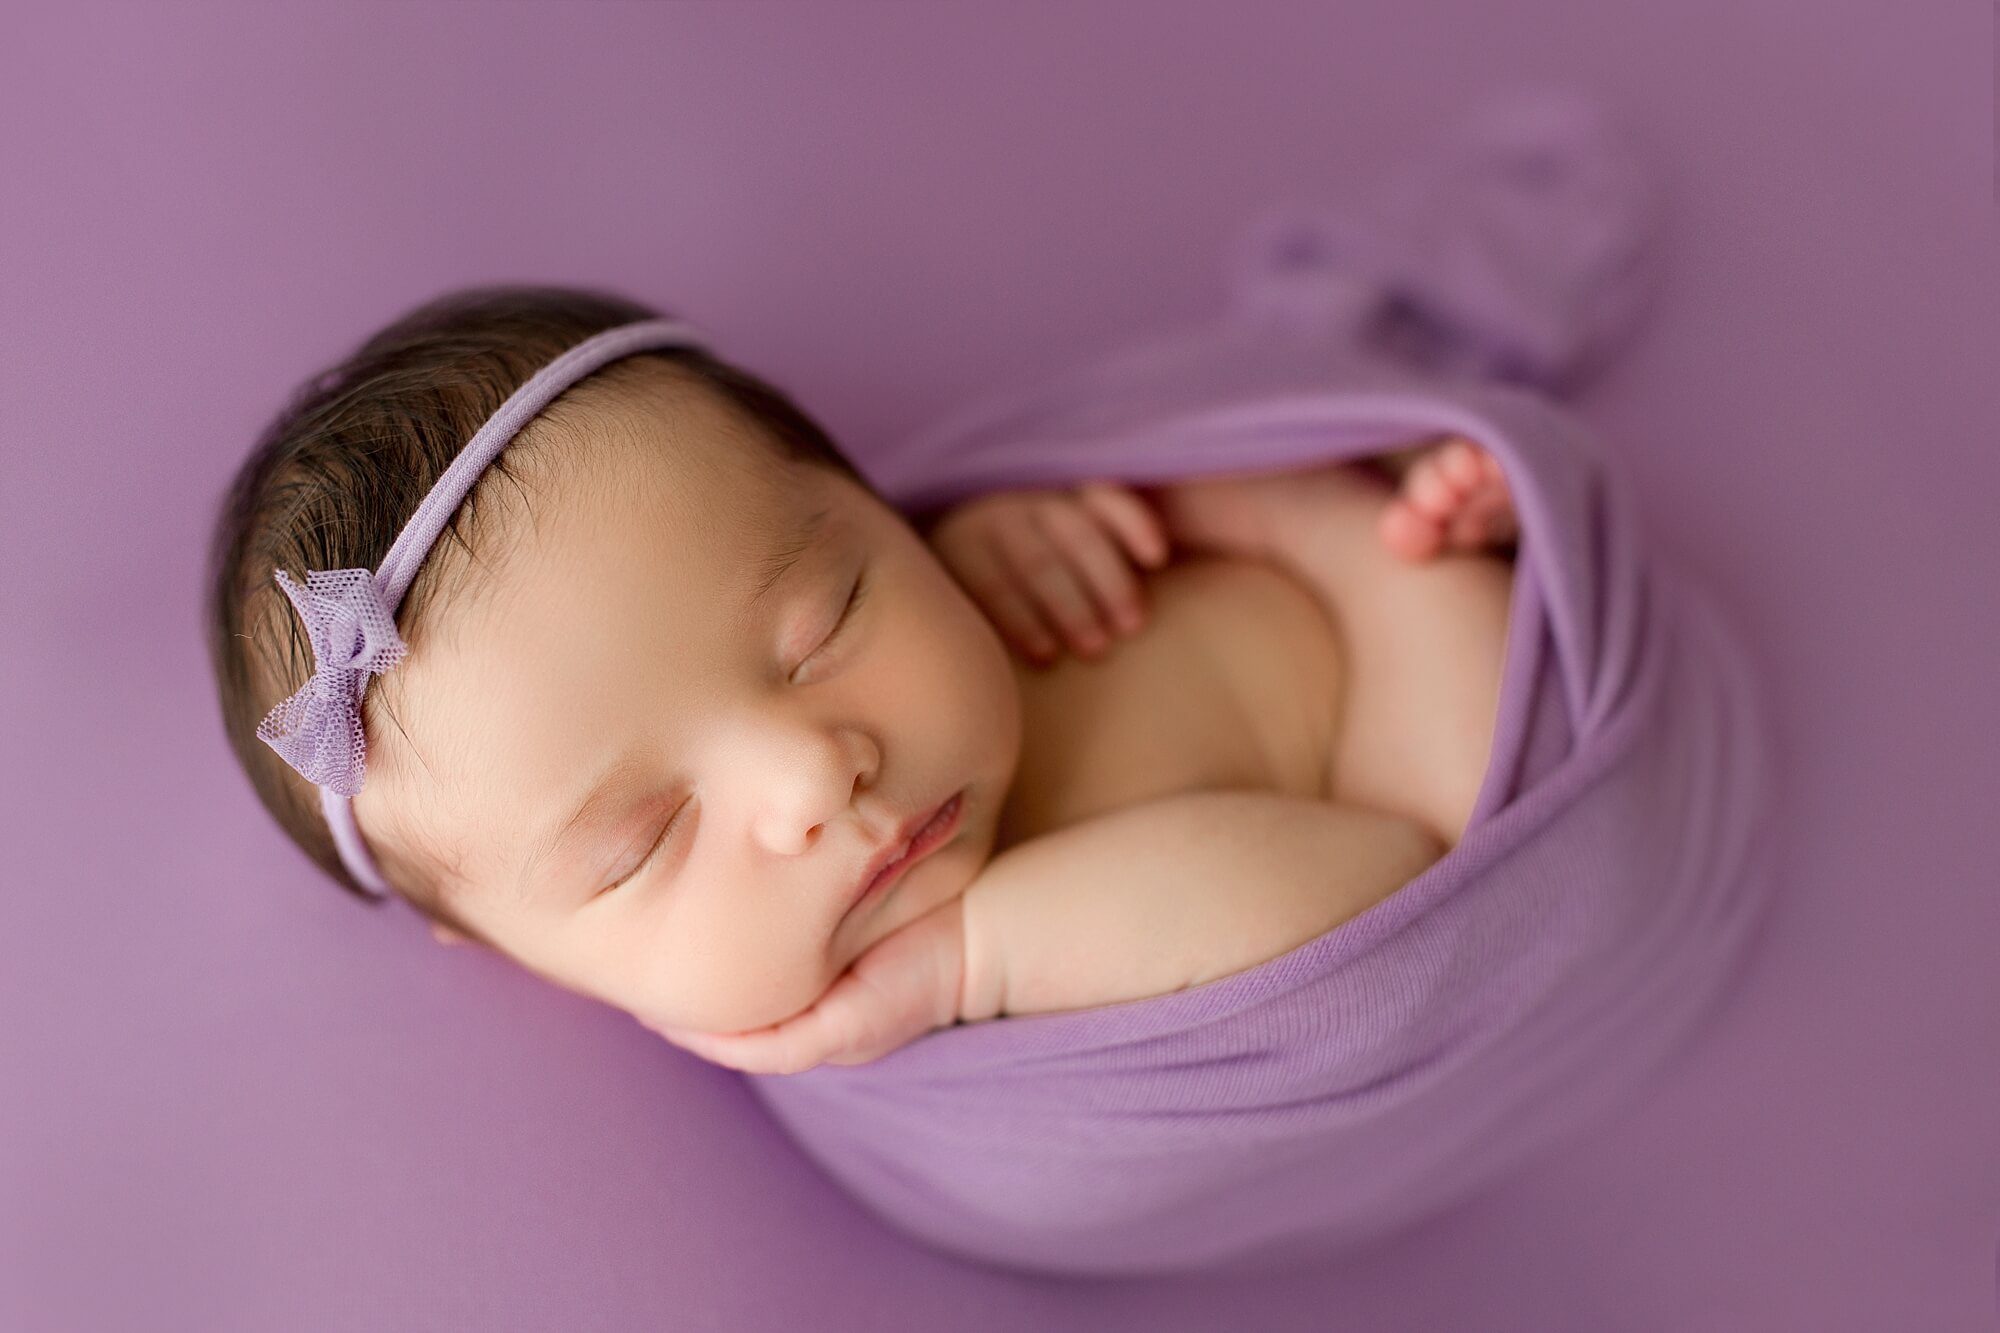 Seattle newborn photographer | baby girl r